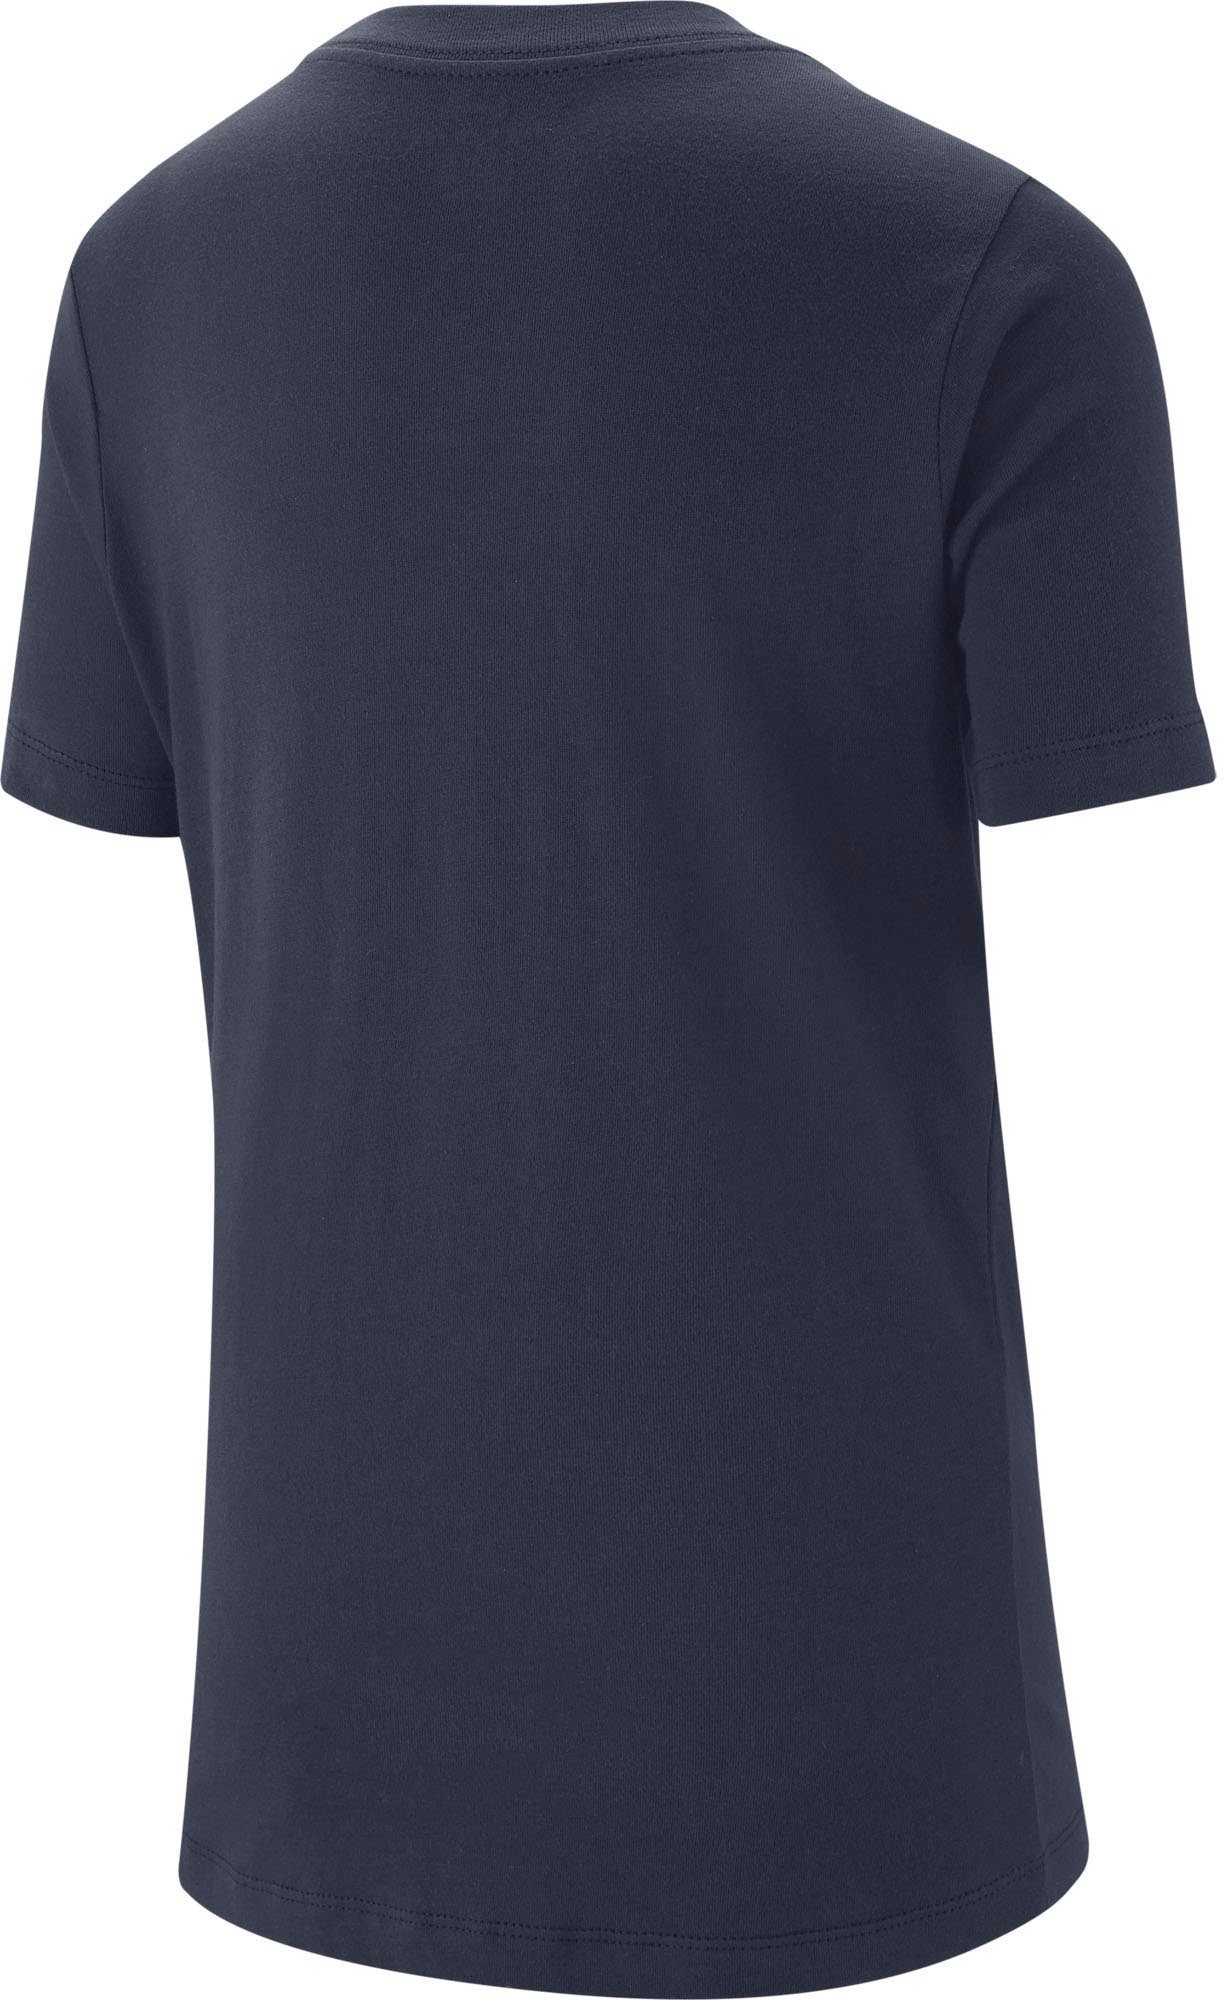 Nike Sportswear BIG T-Shirt marine T-SHIRT KIDS'